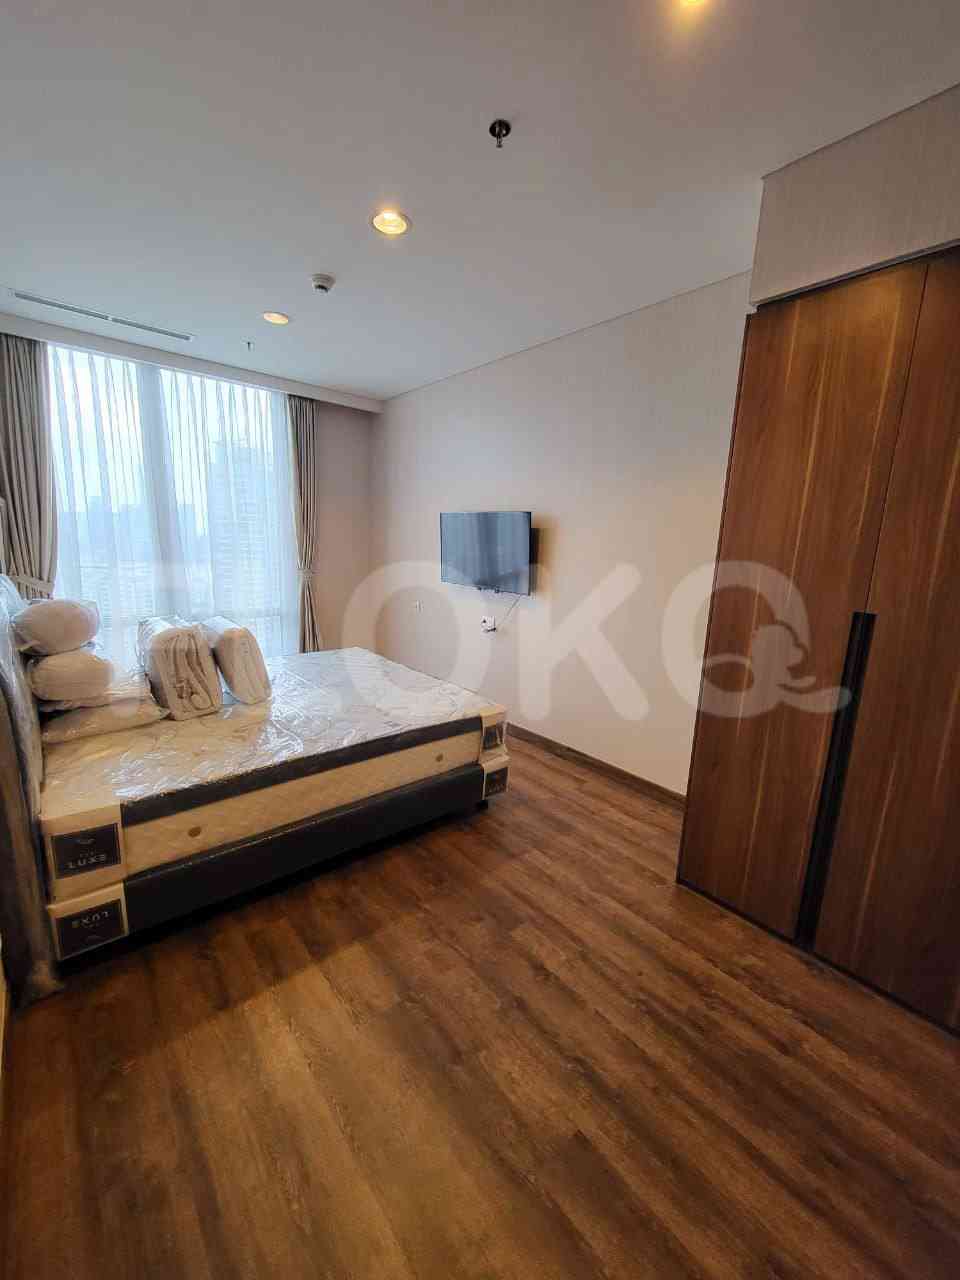 2 Bedroom on 16th Floor for Rent in The Elements Kuningan Apartment - fku479 2